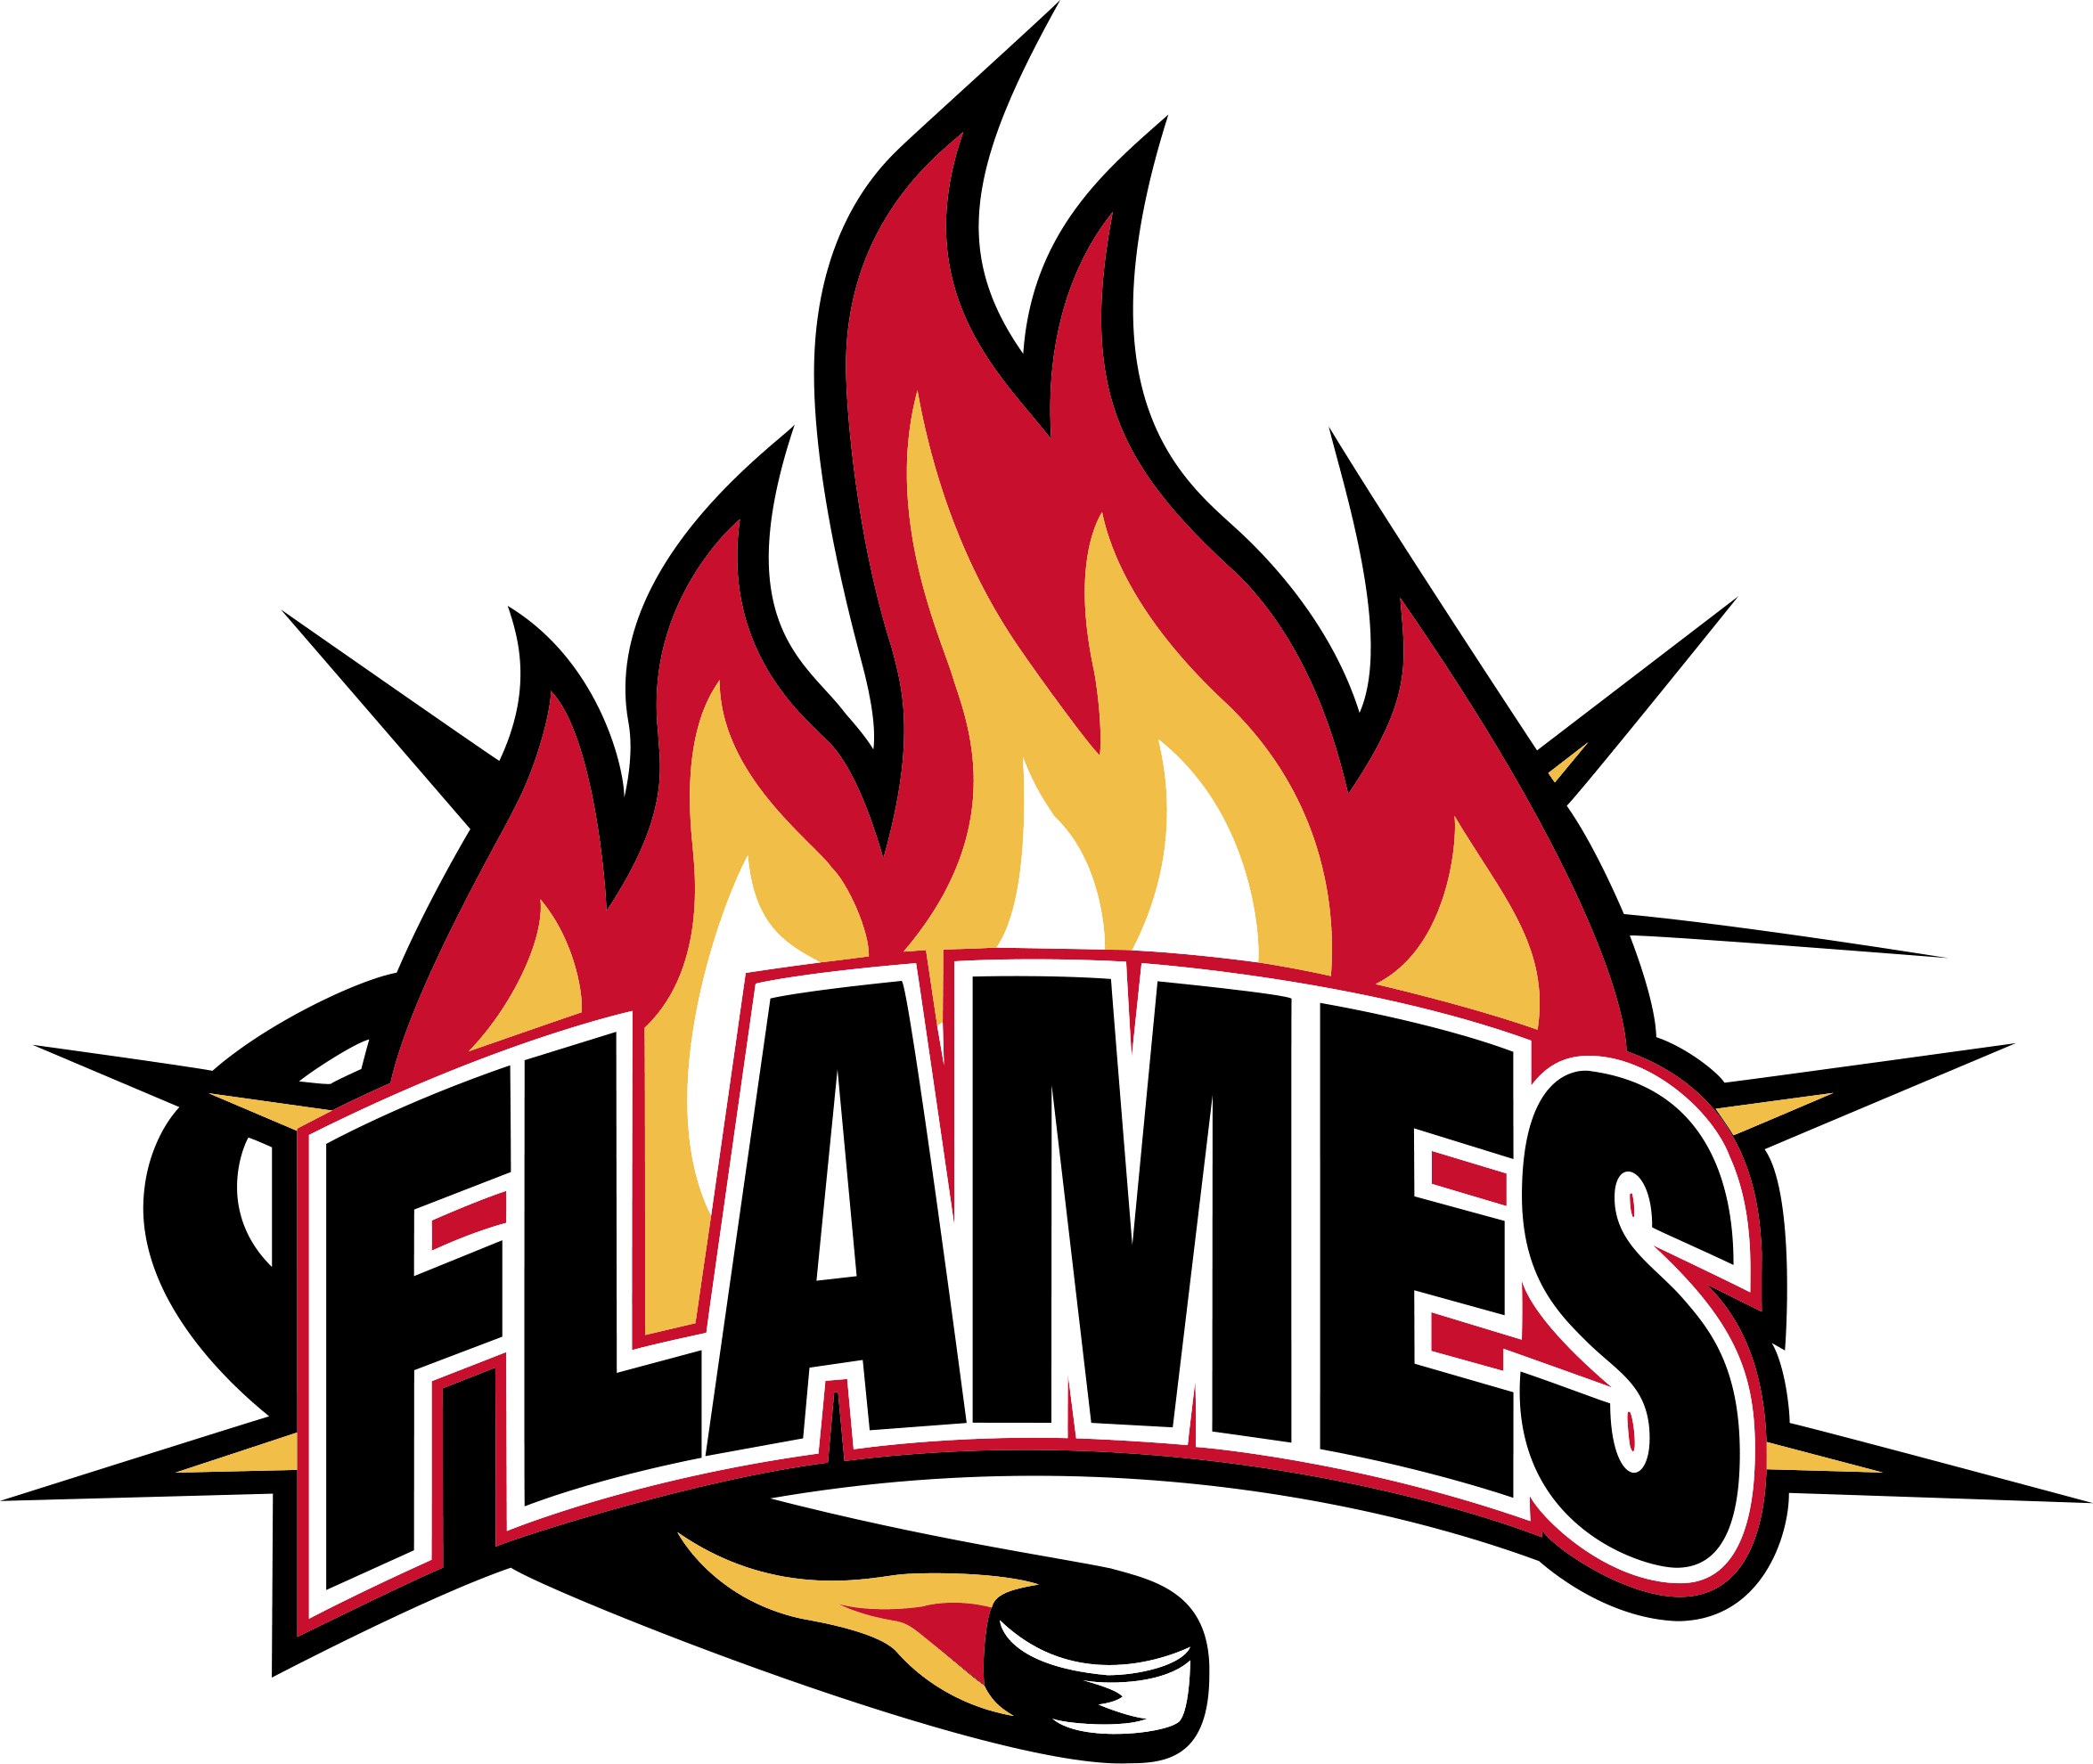 Сайт флейм. Огонь логотип. Огненный логотип. Пламя лого. Логотип огонь пламя.